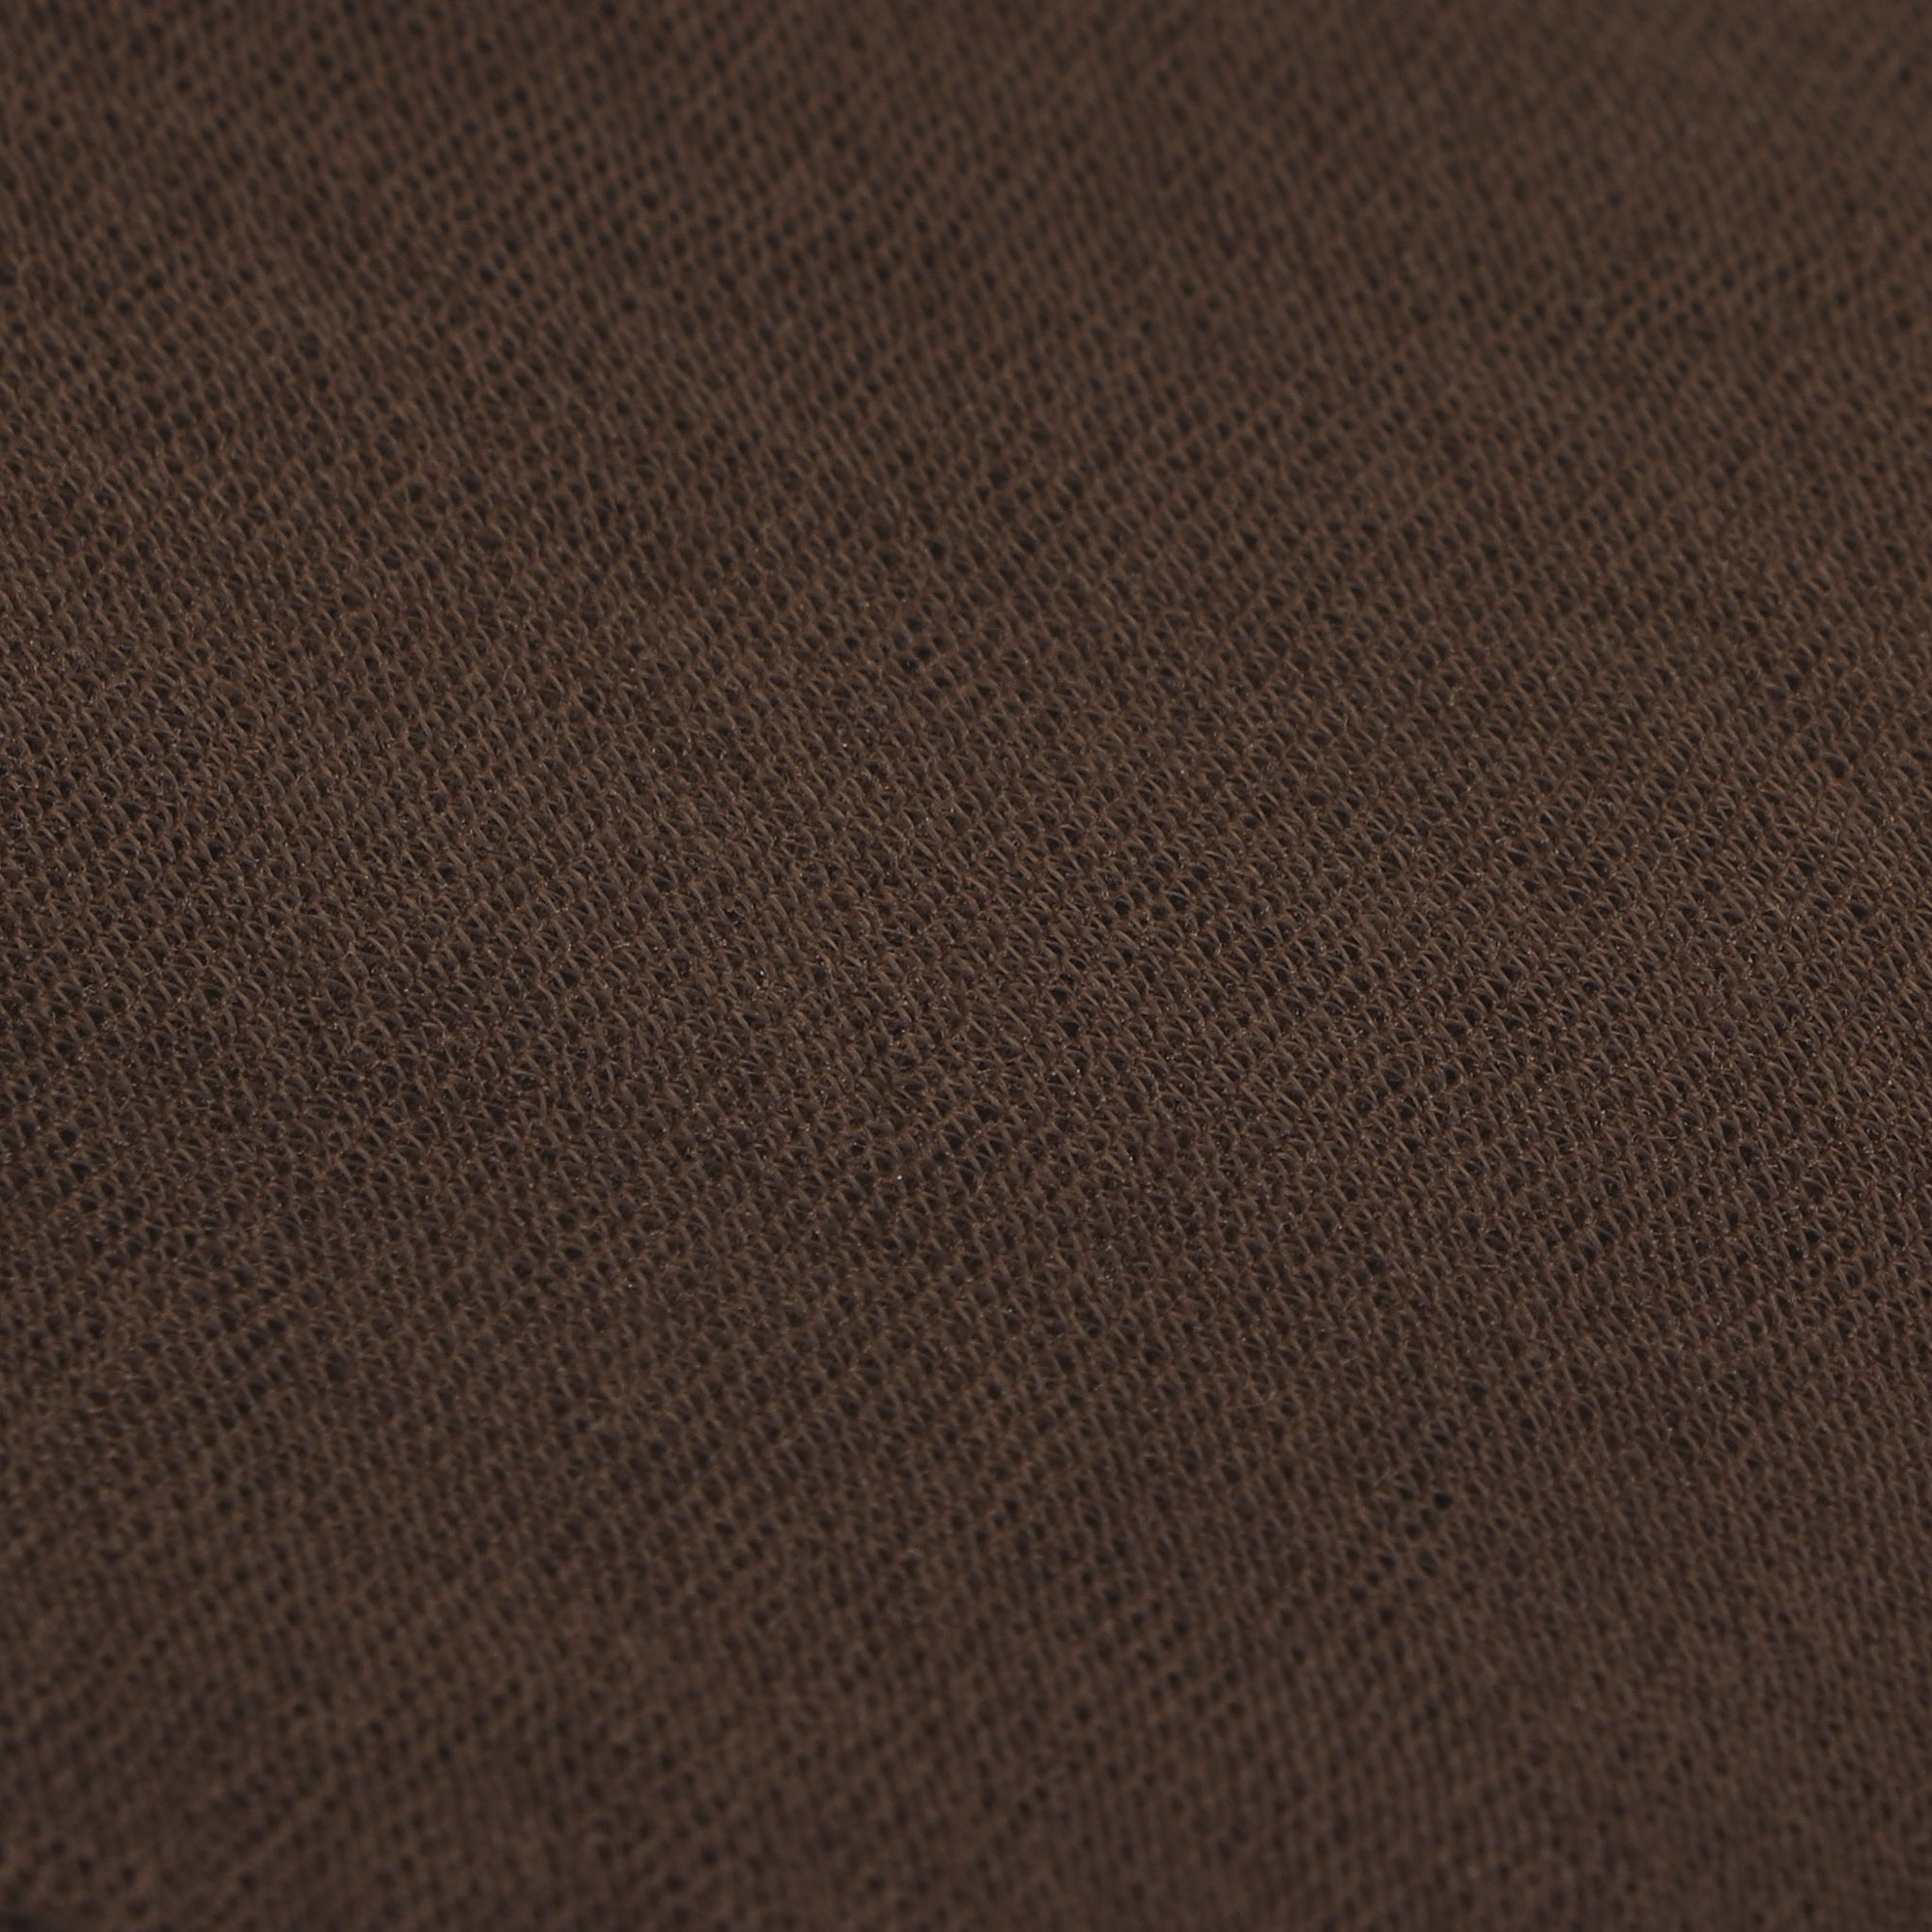 Колготки Sanpellegrino Support 40 Castoro S/M, цвет тёмно-коричневый, размер 1/2 - фото 2